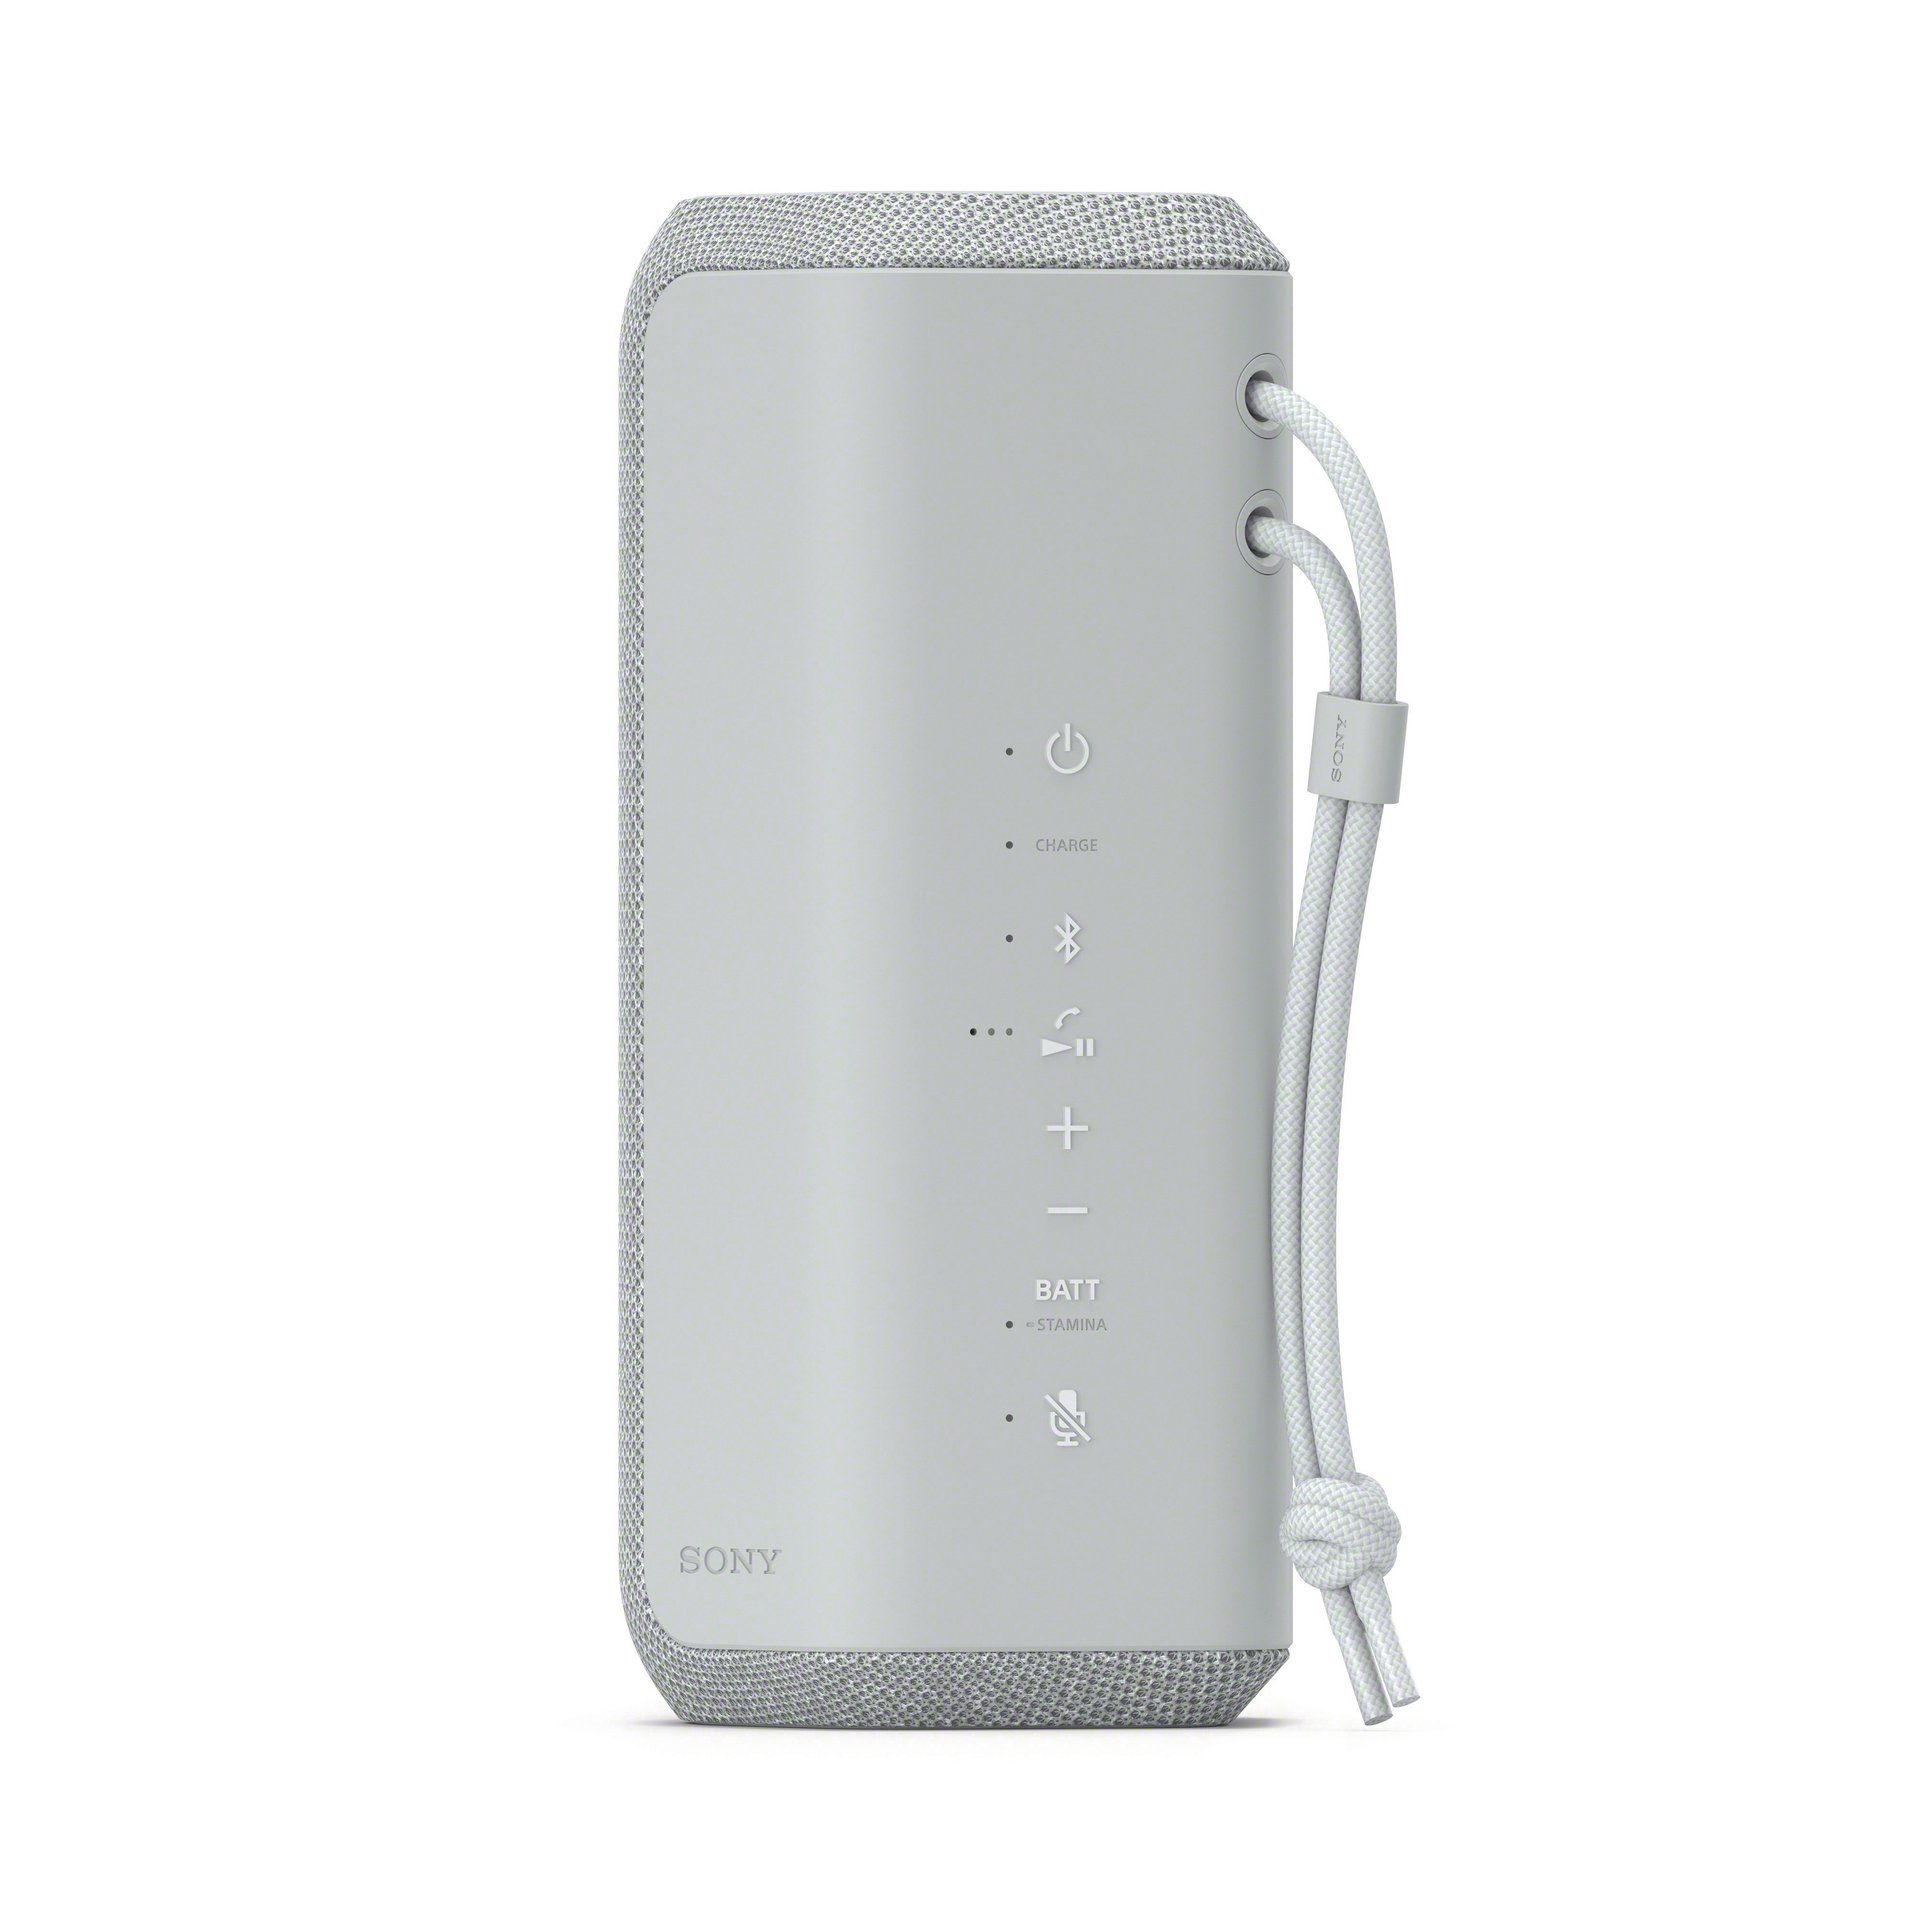 SRS-XE200 hellgrau Bluetooth-Lautsprecher Sony